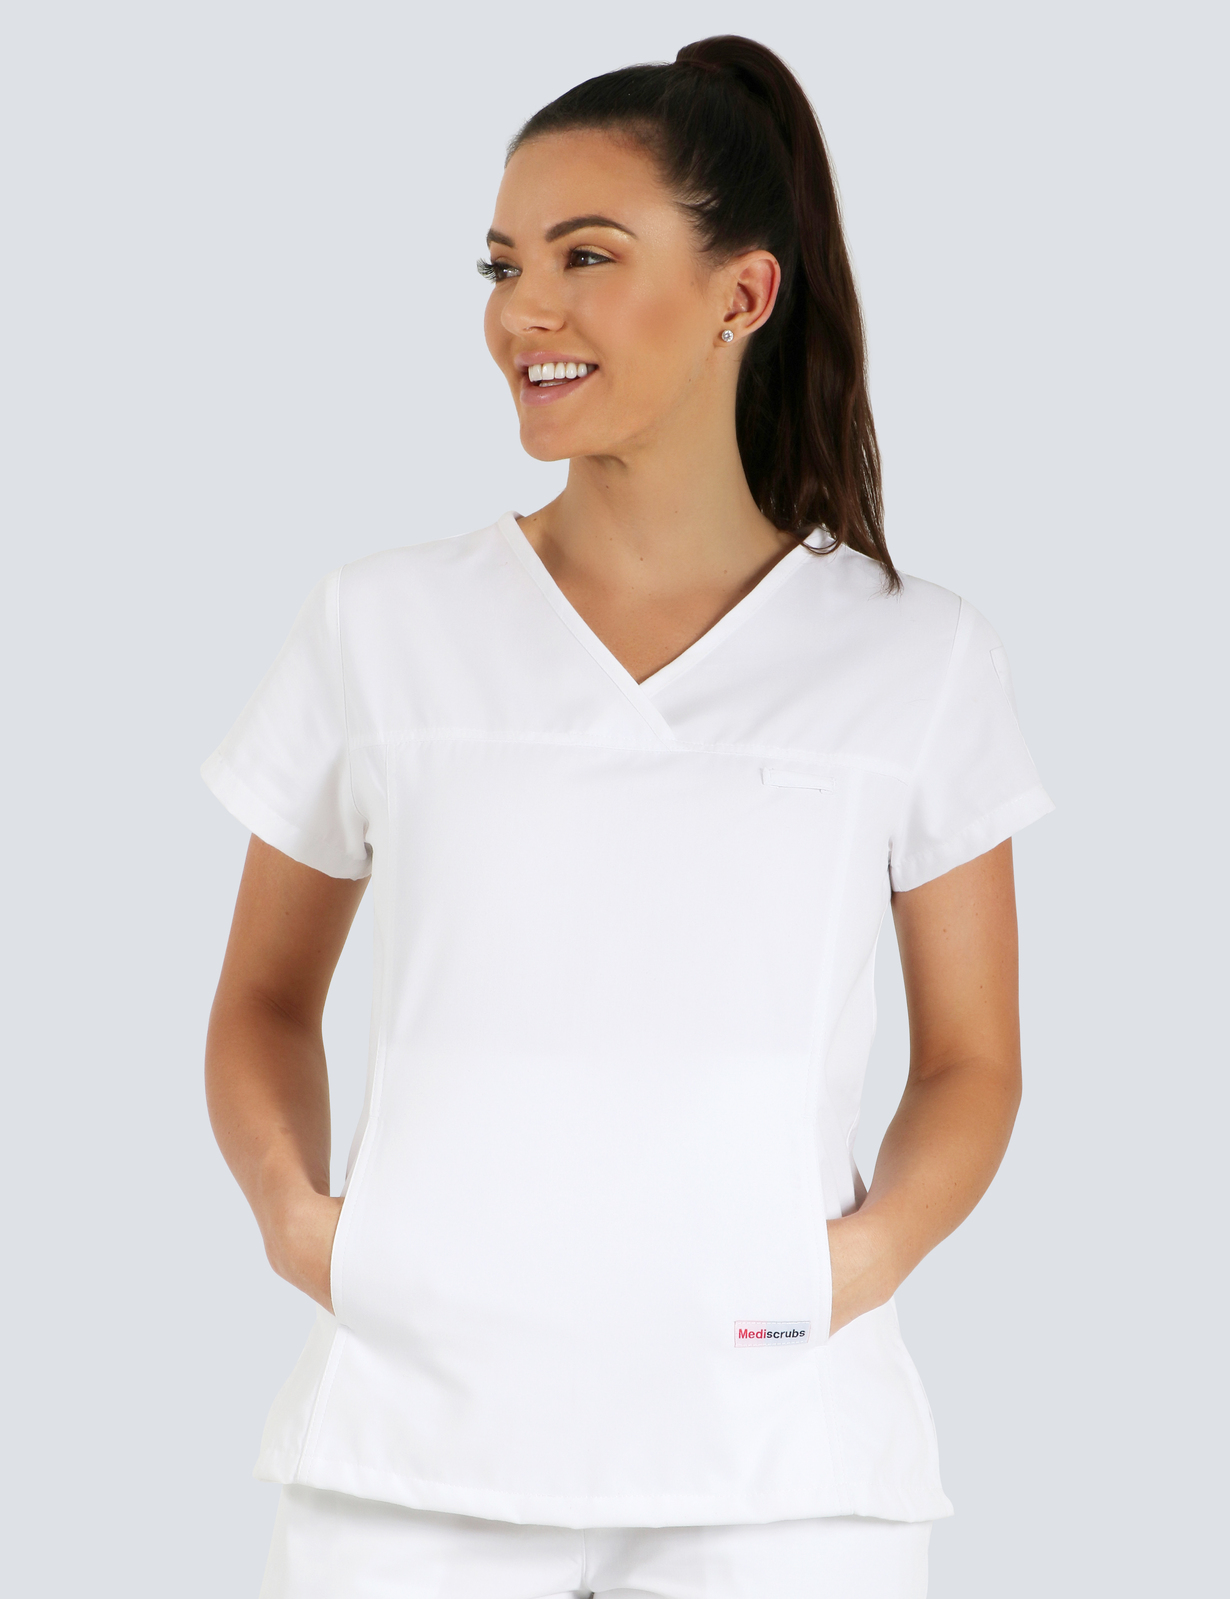 Queensland Children's Hospital Emergency Department Enrolled Nurse Uniform Top Bundle  (Women's Fit Top in White incl Logos)